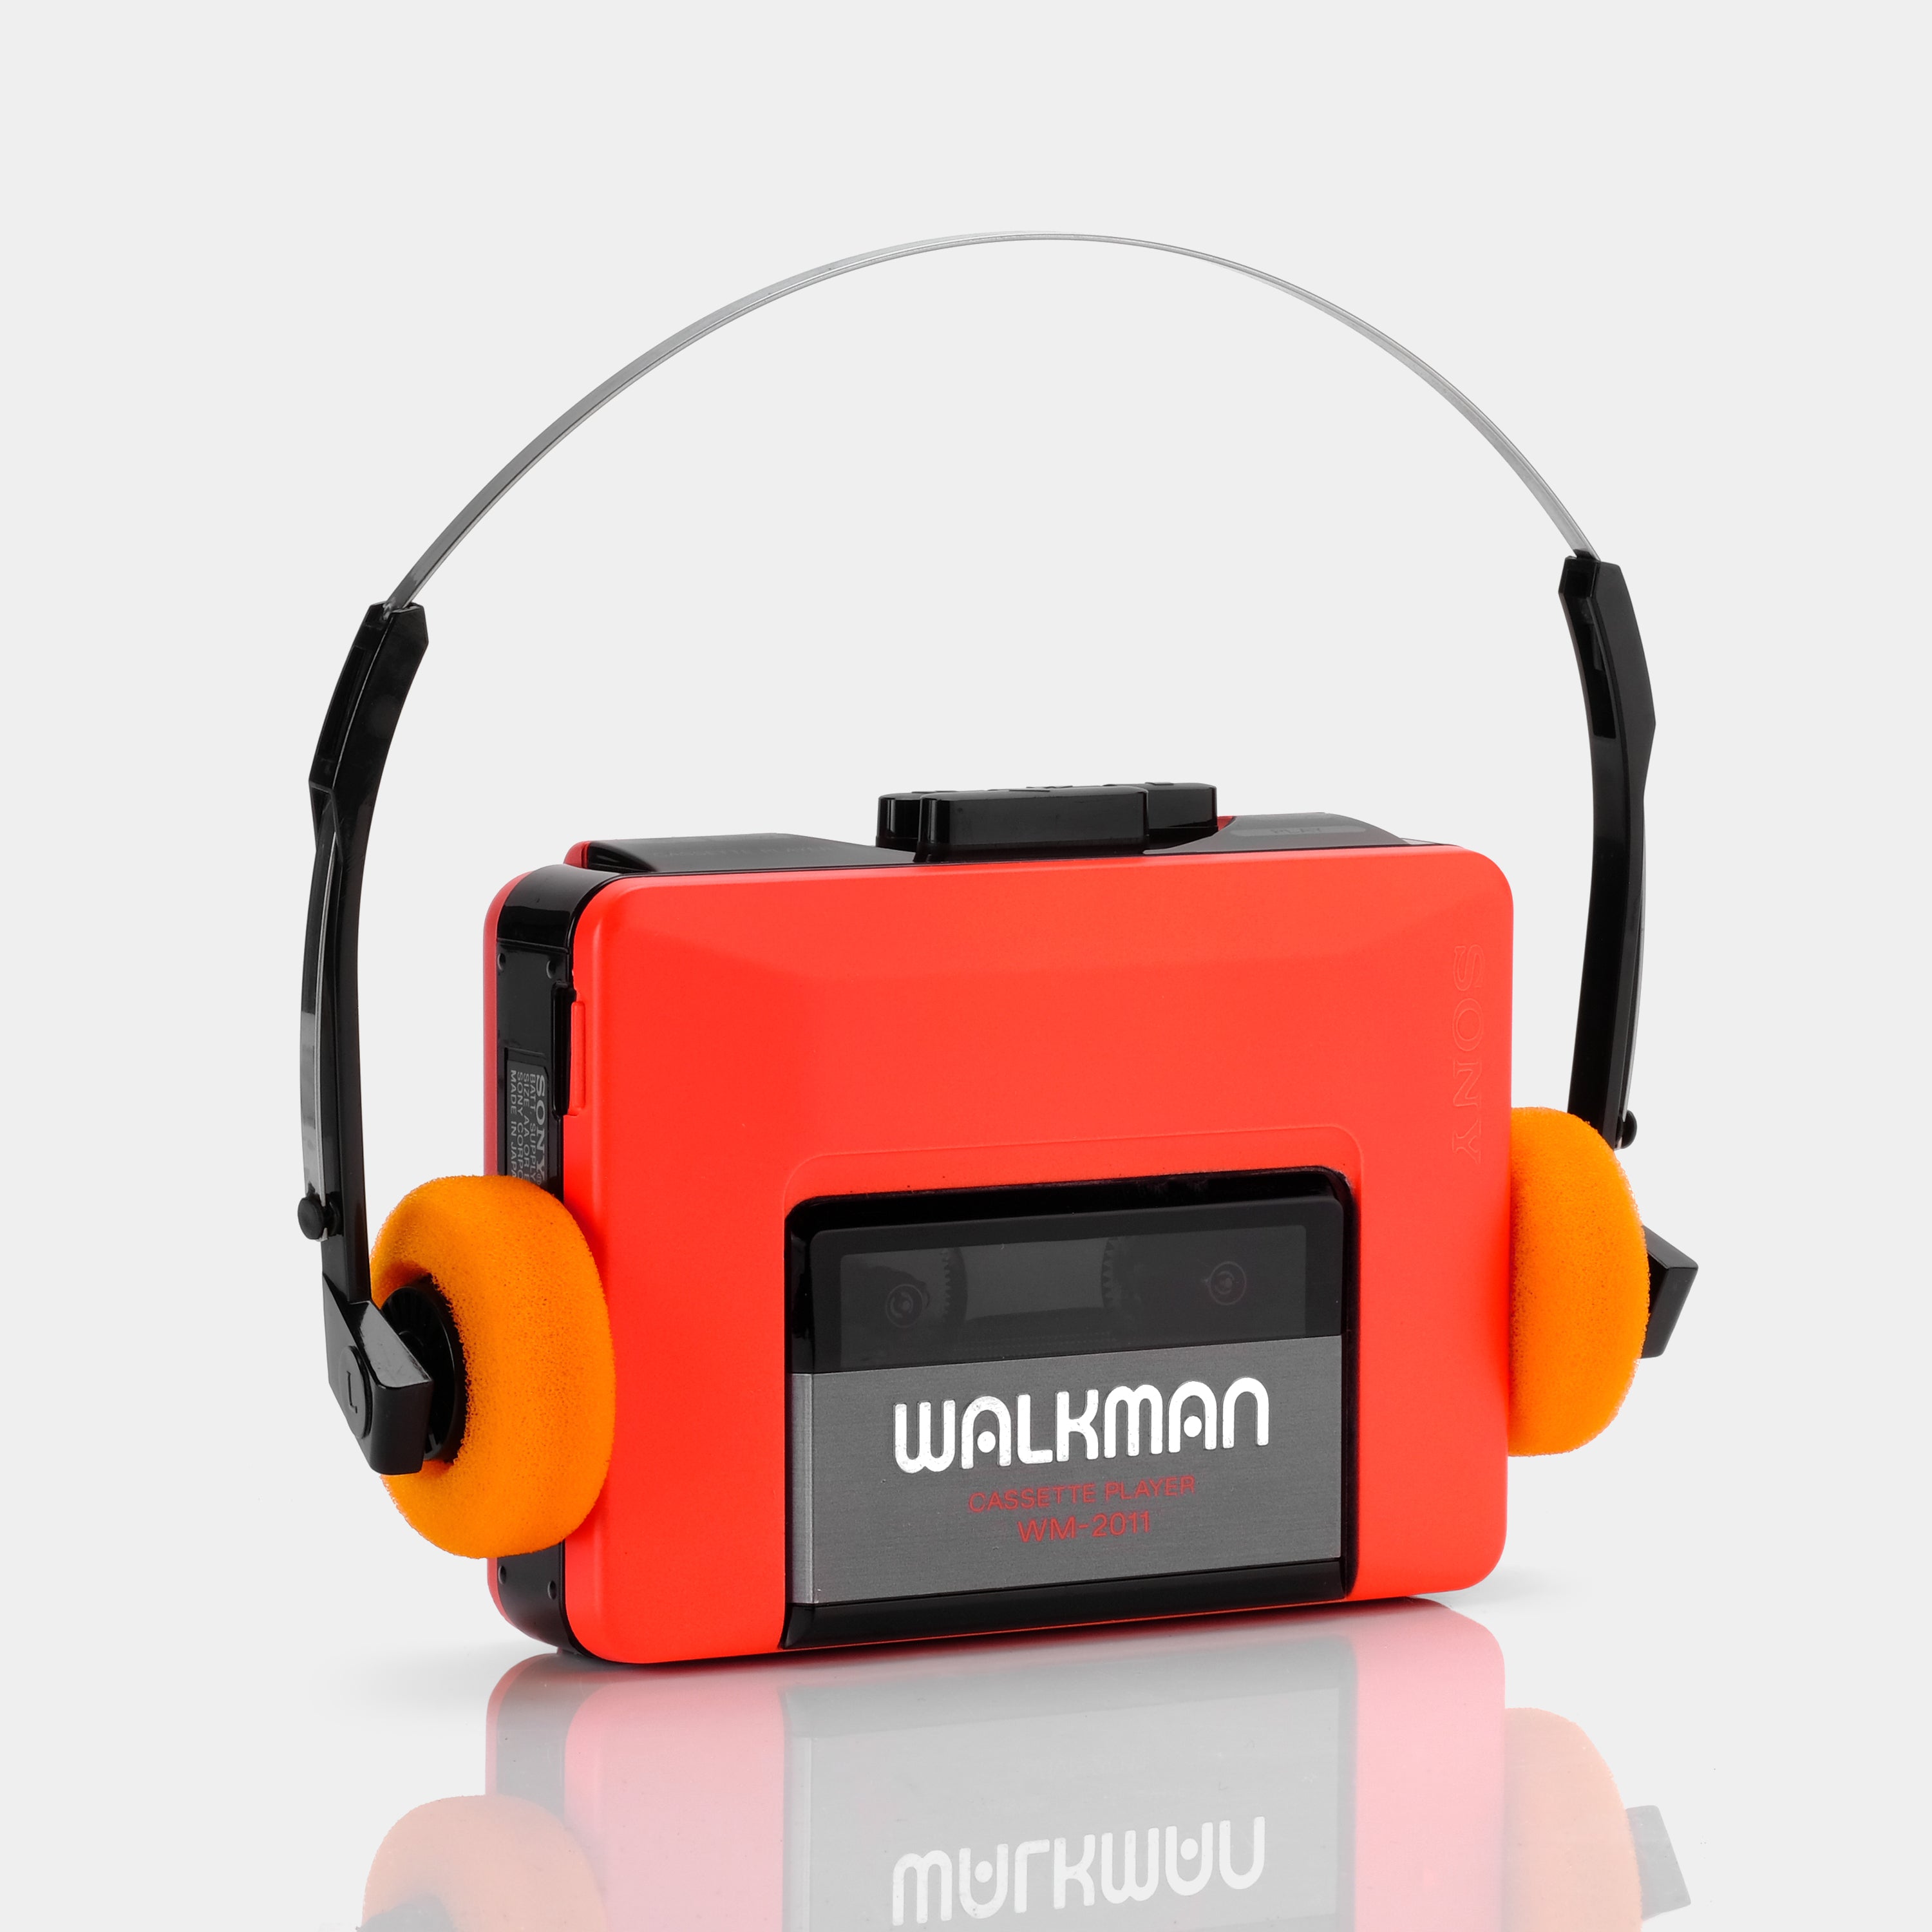 Sony Walkman WM-2011 Fluorescent Orange Portable Cassette Player